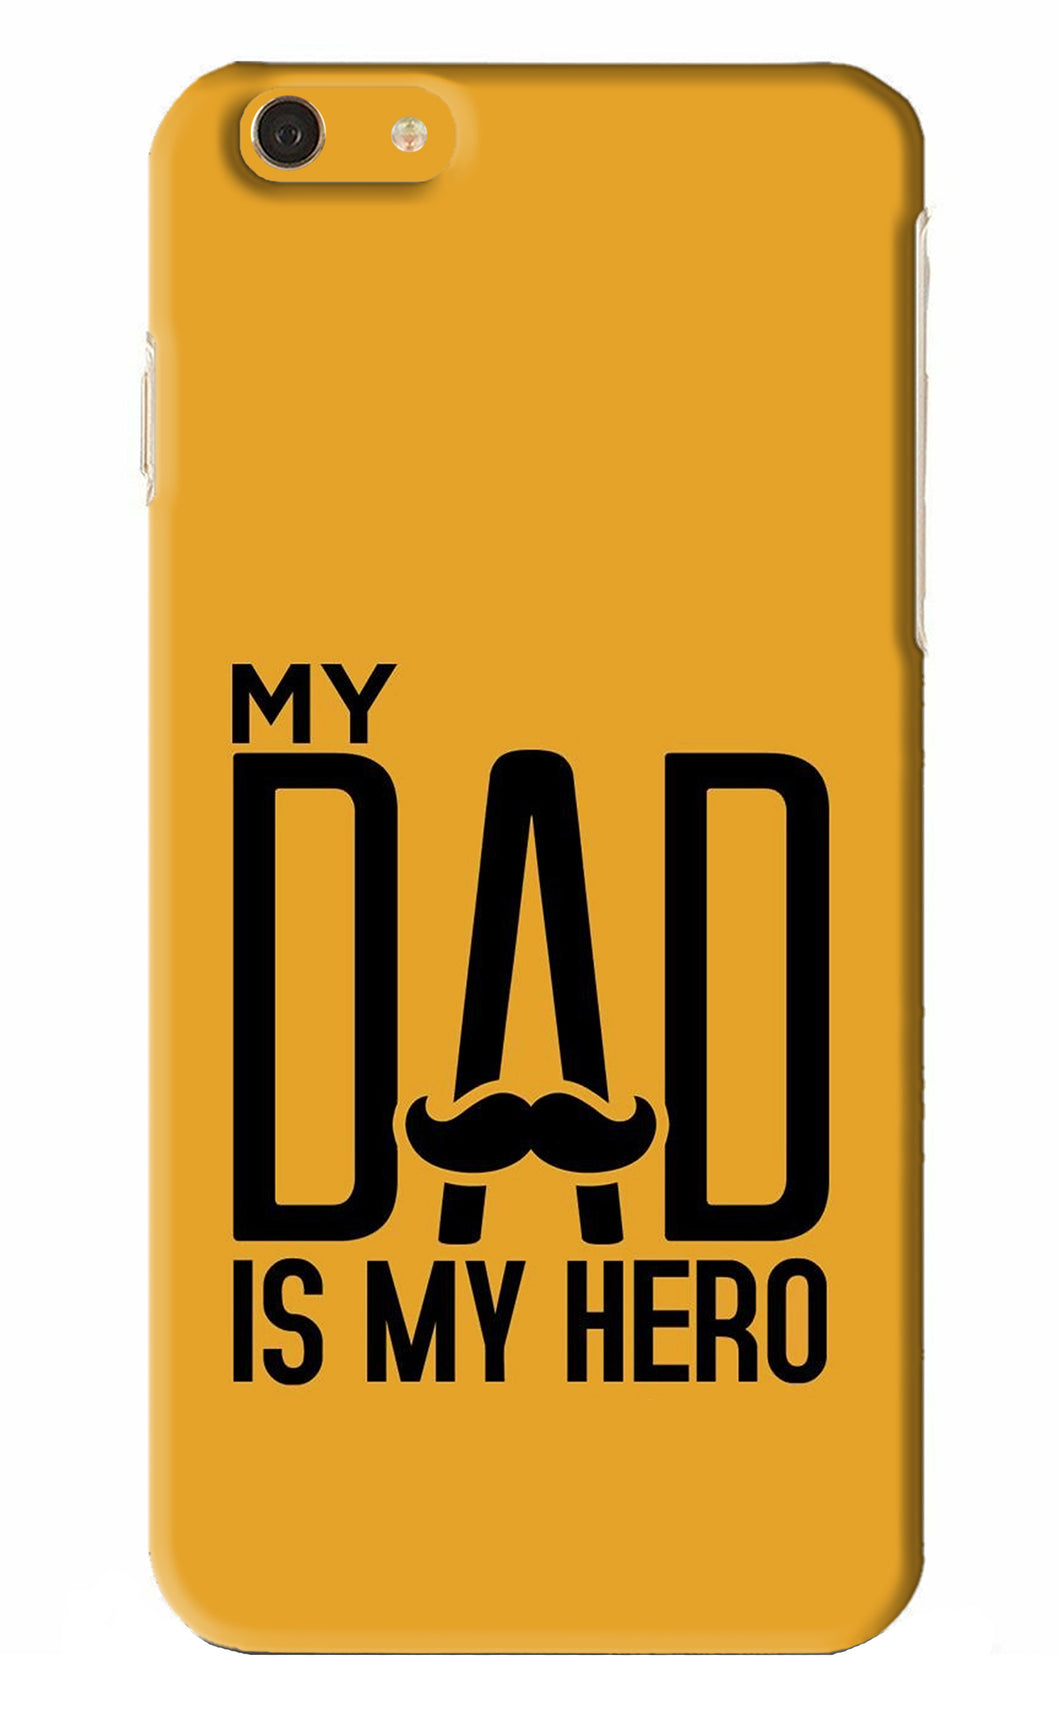 My Dad Is My Hero iPhone 6S Plus Back Skin Wrap